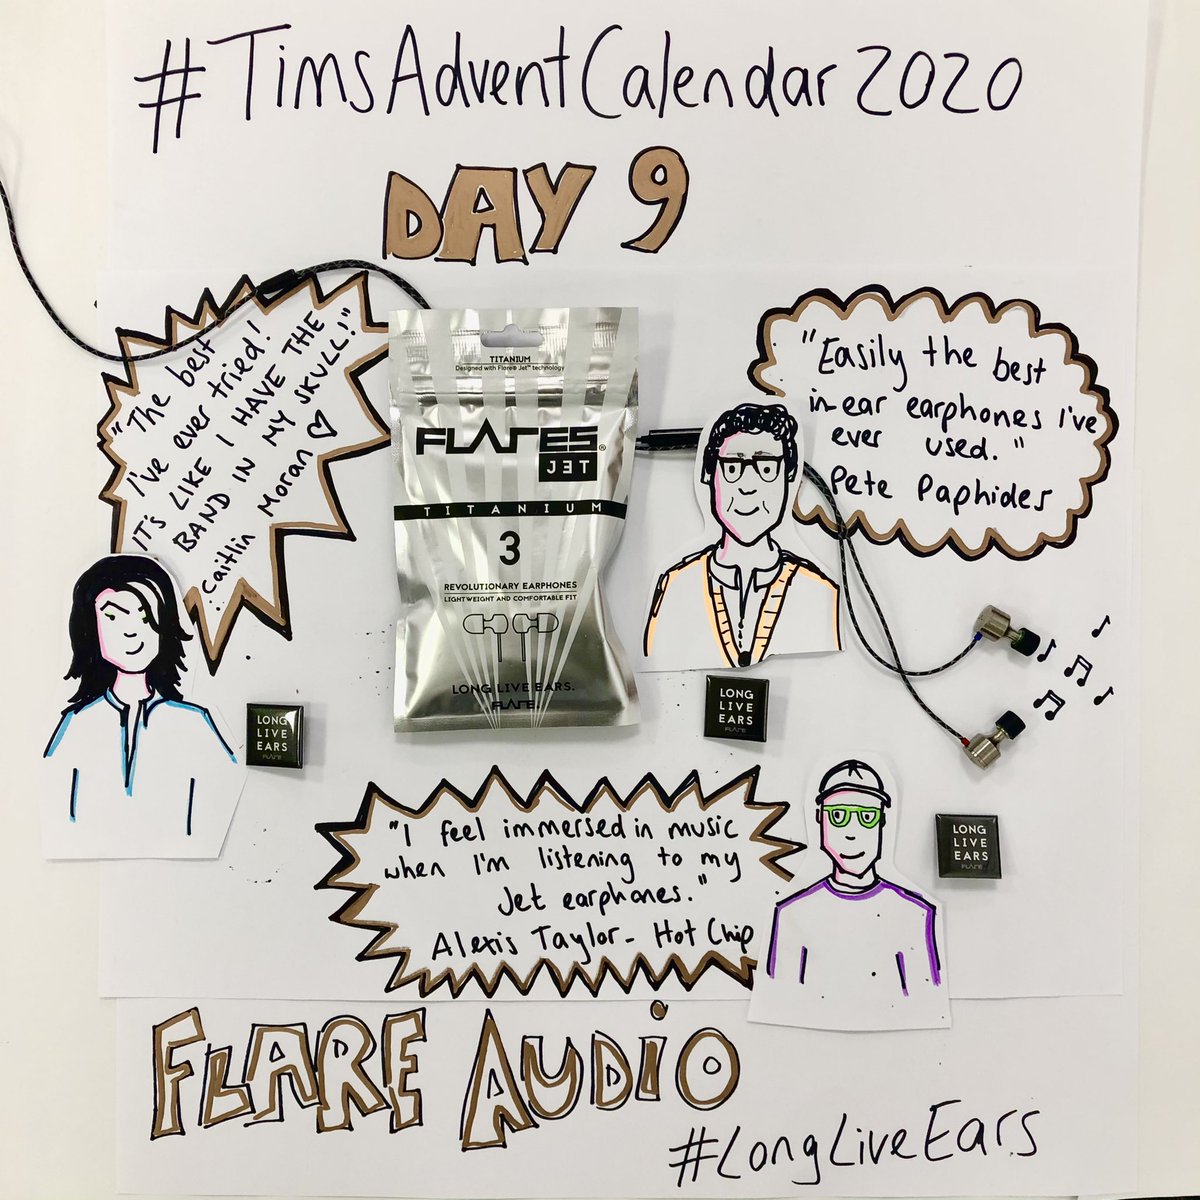 Retweet to win some ace @flareaudio titanium earphones #TimsAdventCalendar2020 Day Nine Winner picked at random at 11am on December 10th 🎄 flareaudio.com